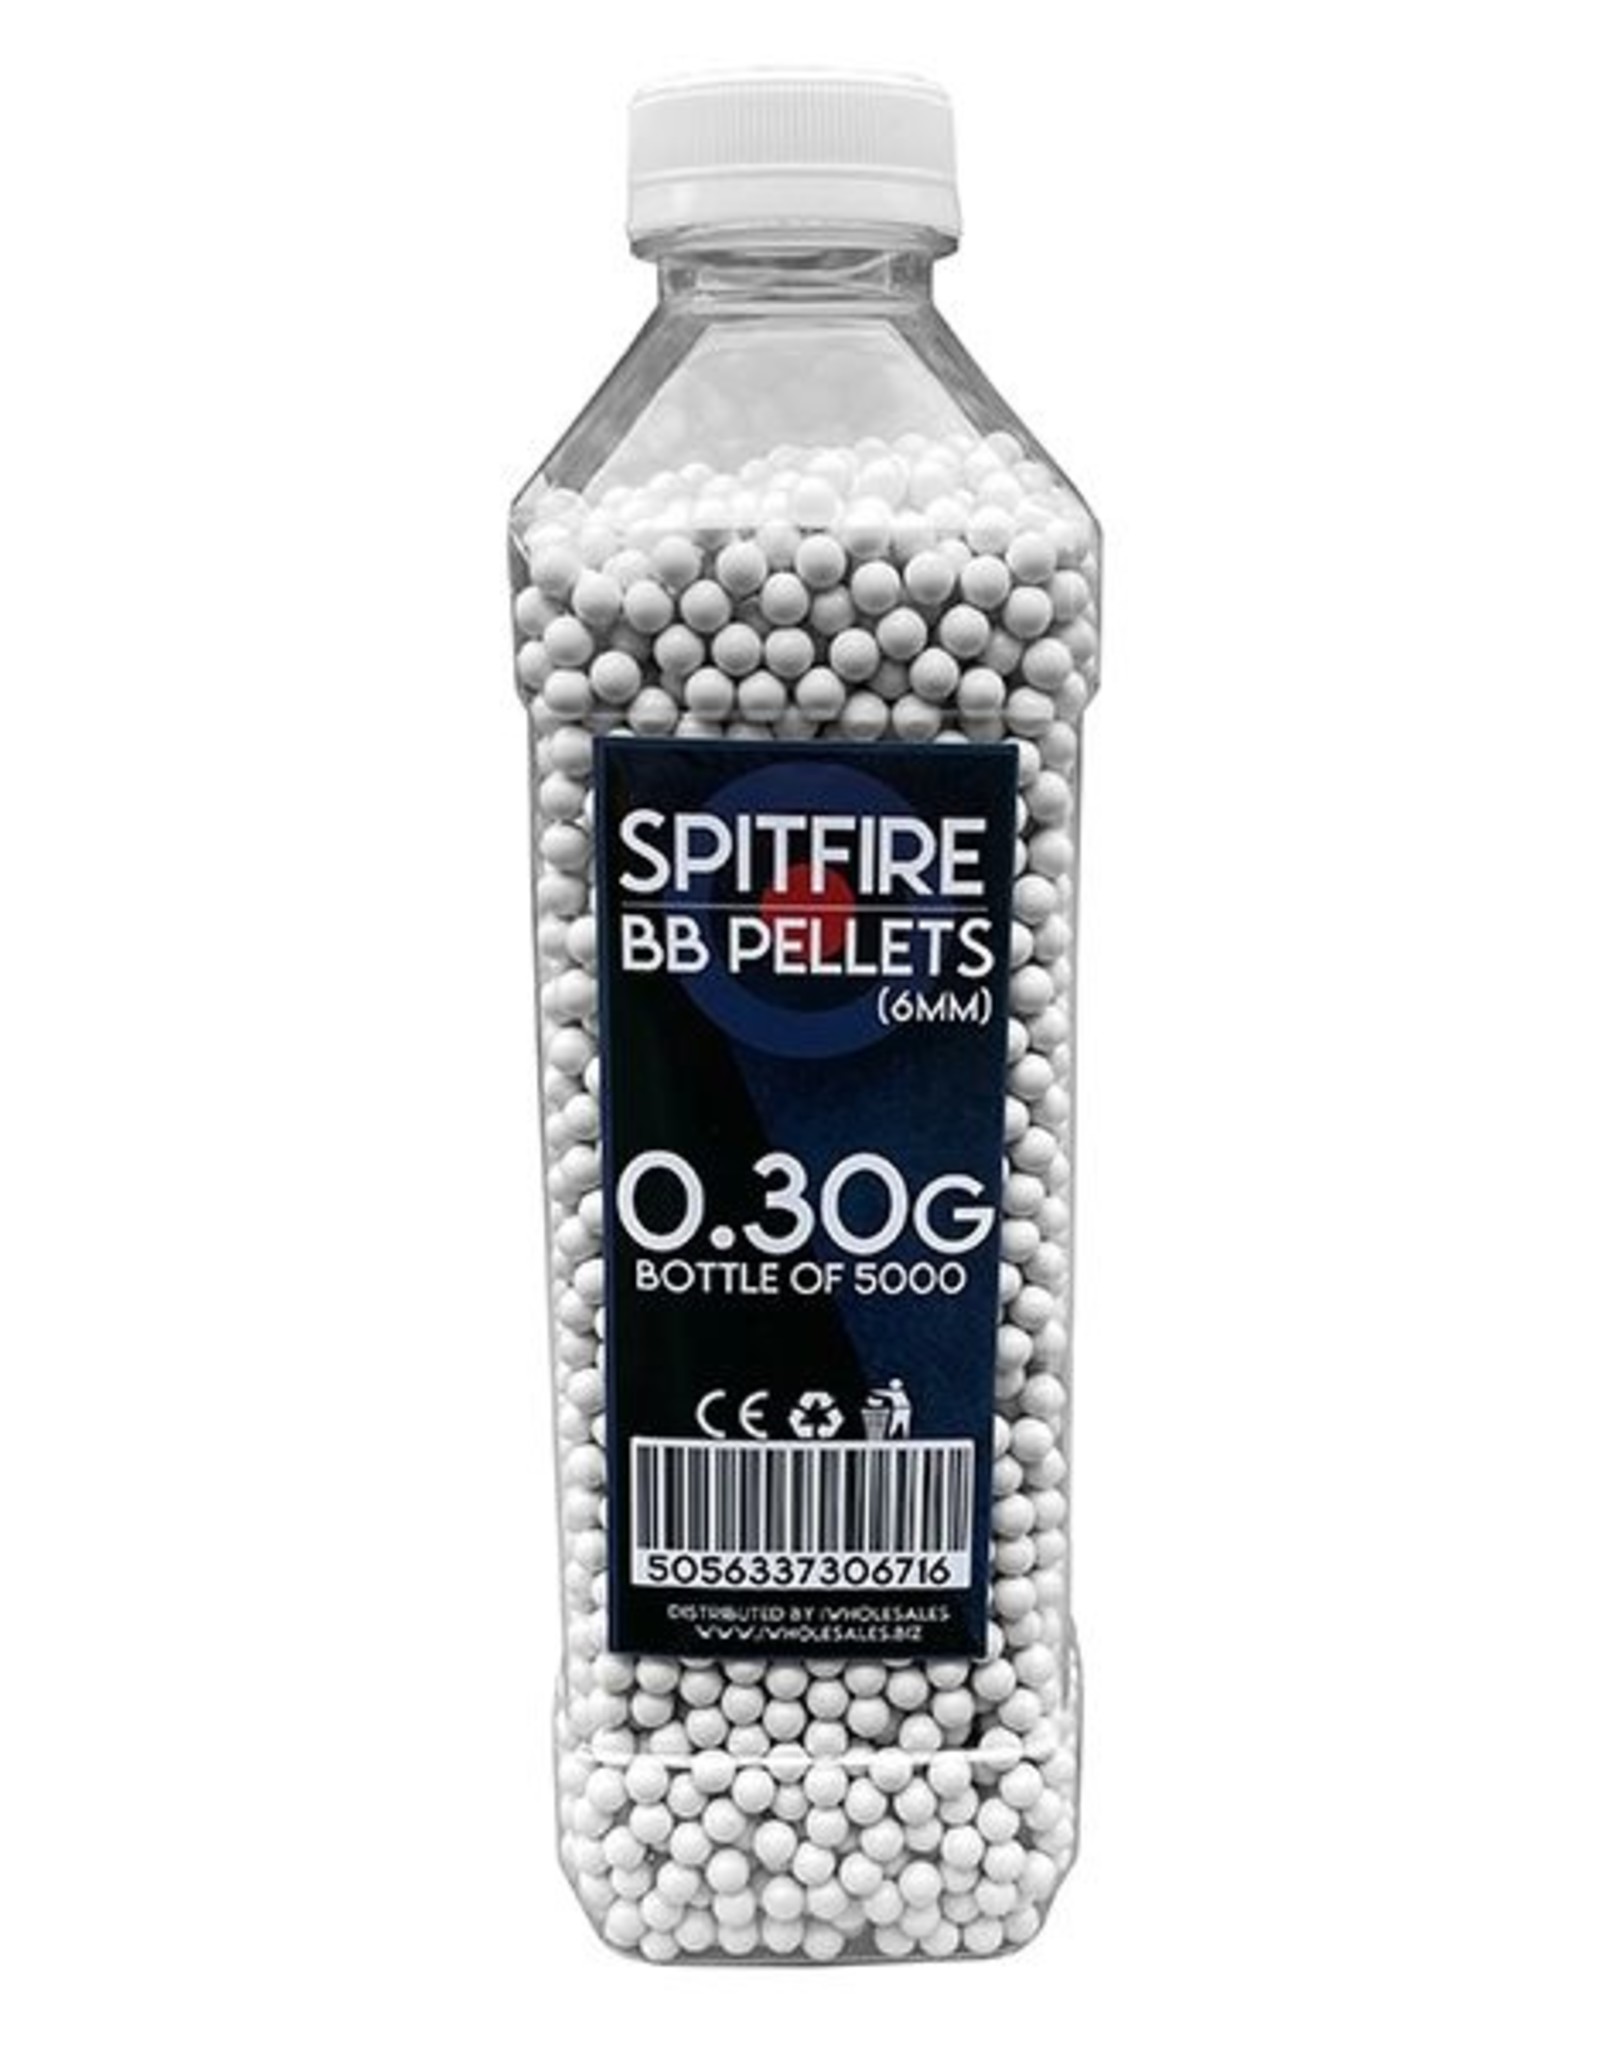 SPITFIRE Spitfire BB Pellets 0.30g (5000 Bottle - White)